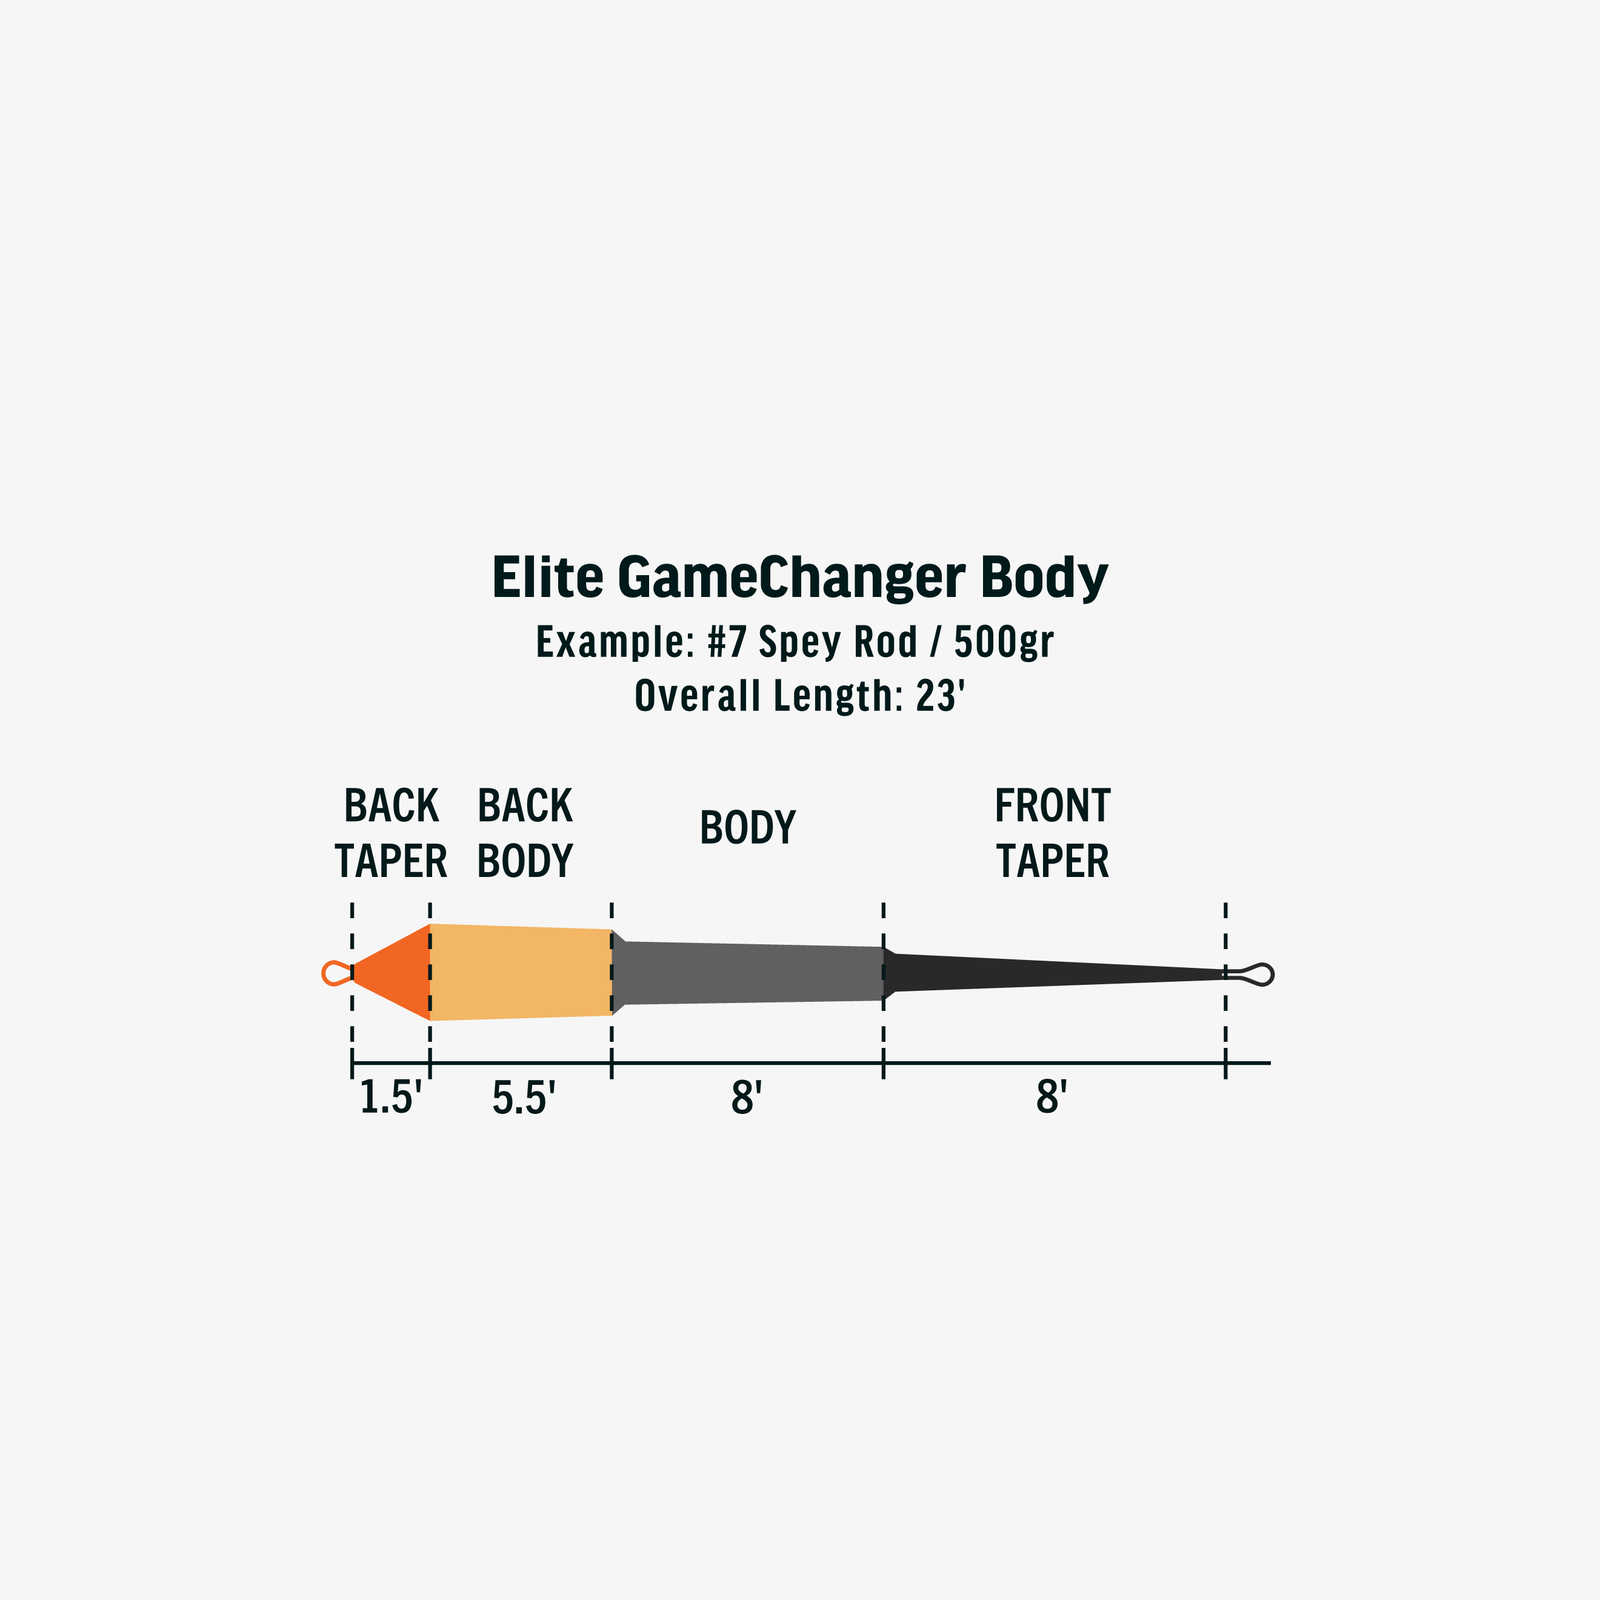 Elite GameChanger Body Shooting Head (I/S2/S3)